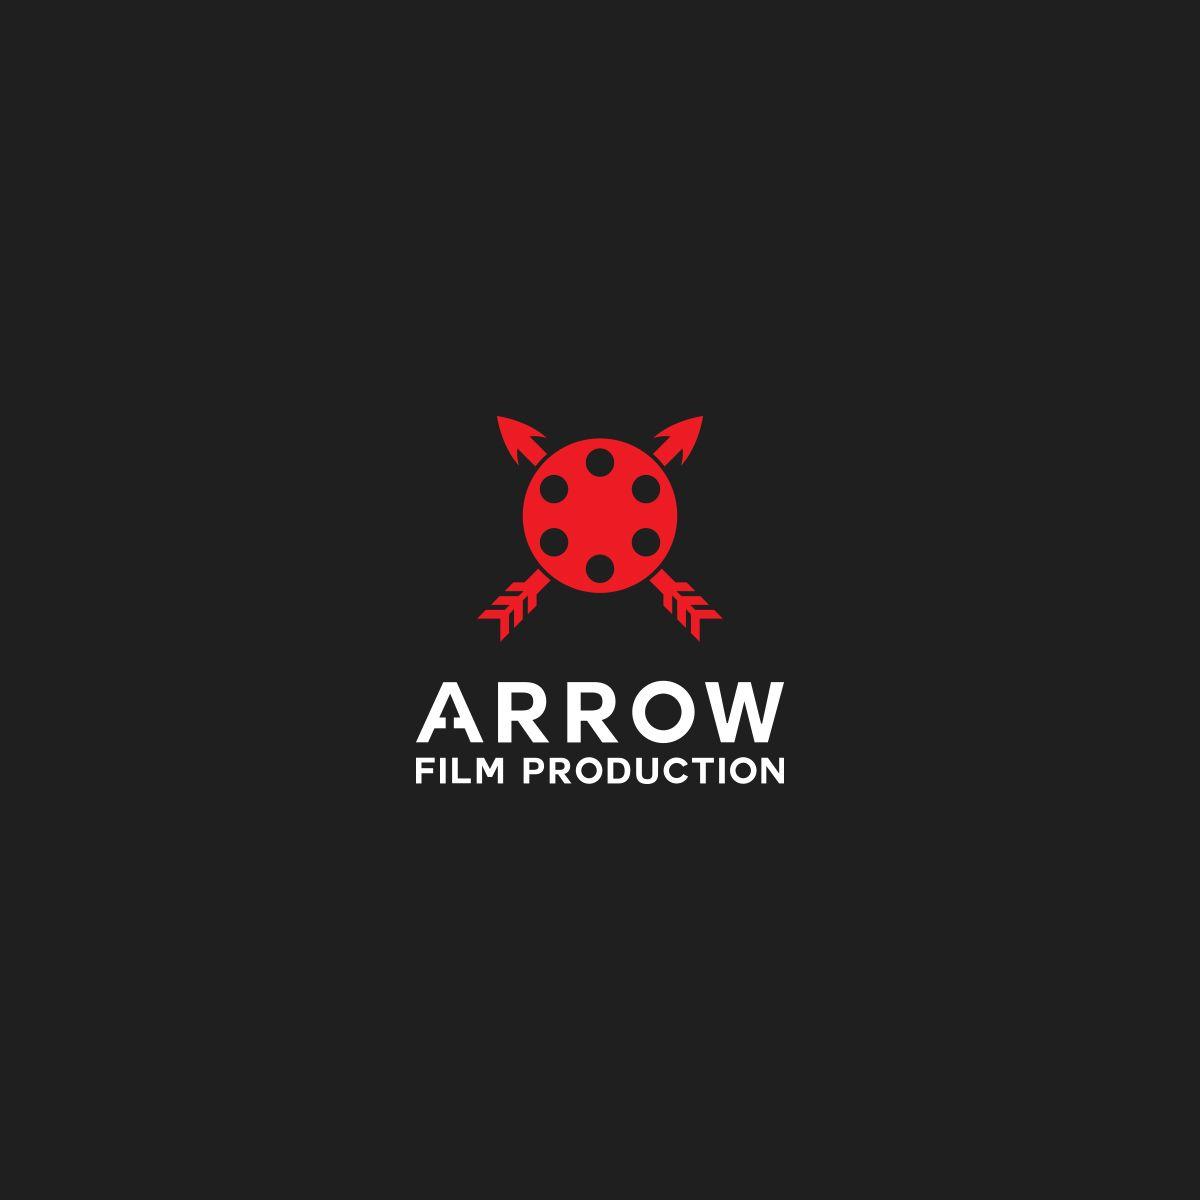 Poppy Movie Logo - Modern, Professional, Movie Production Logo Design for ARROW FILM